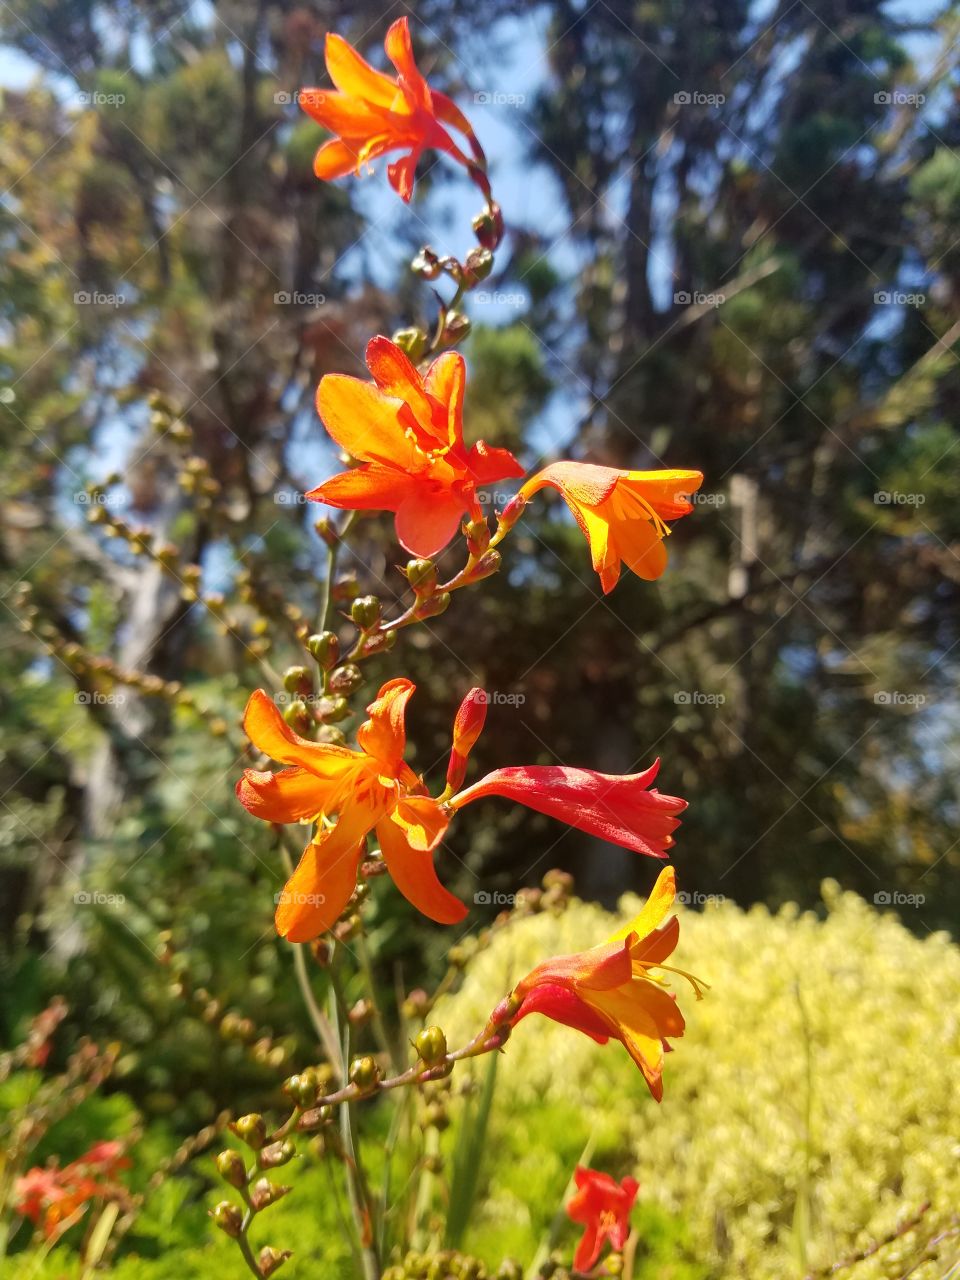 Sun shining through orange flowers